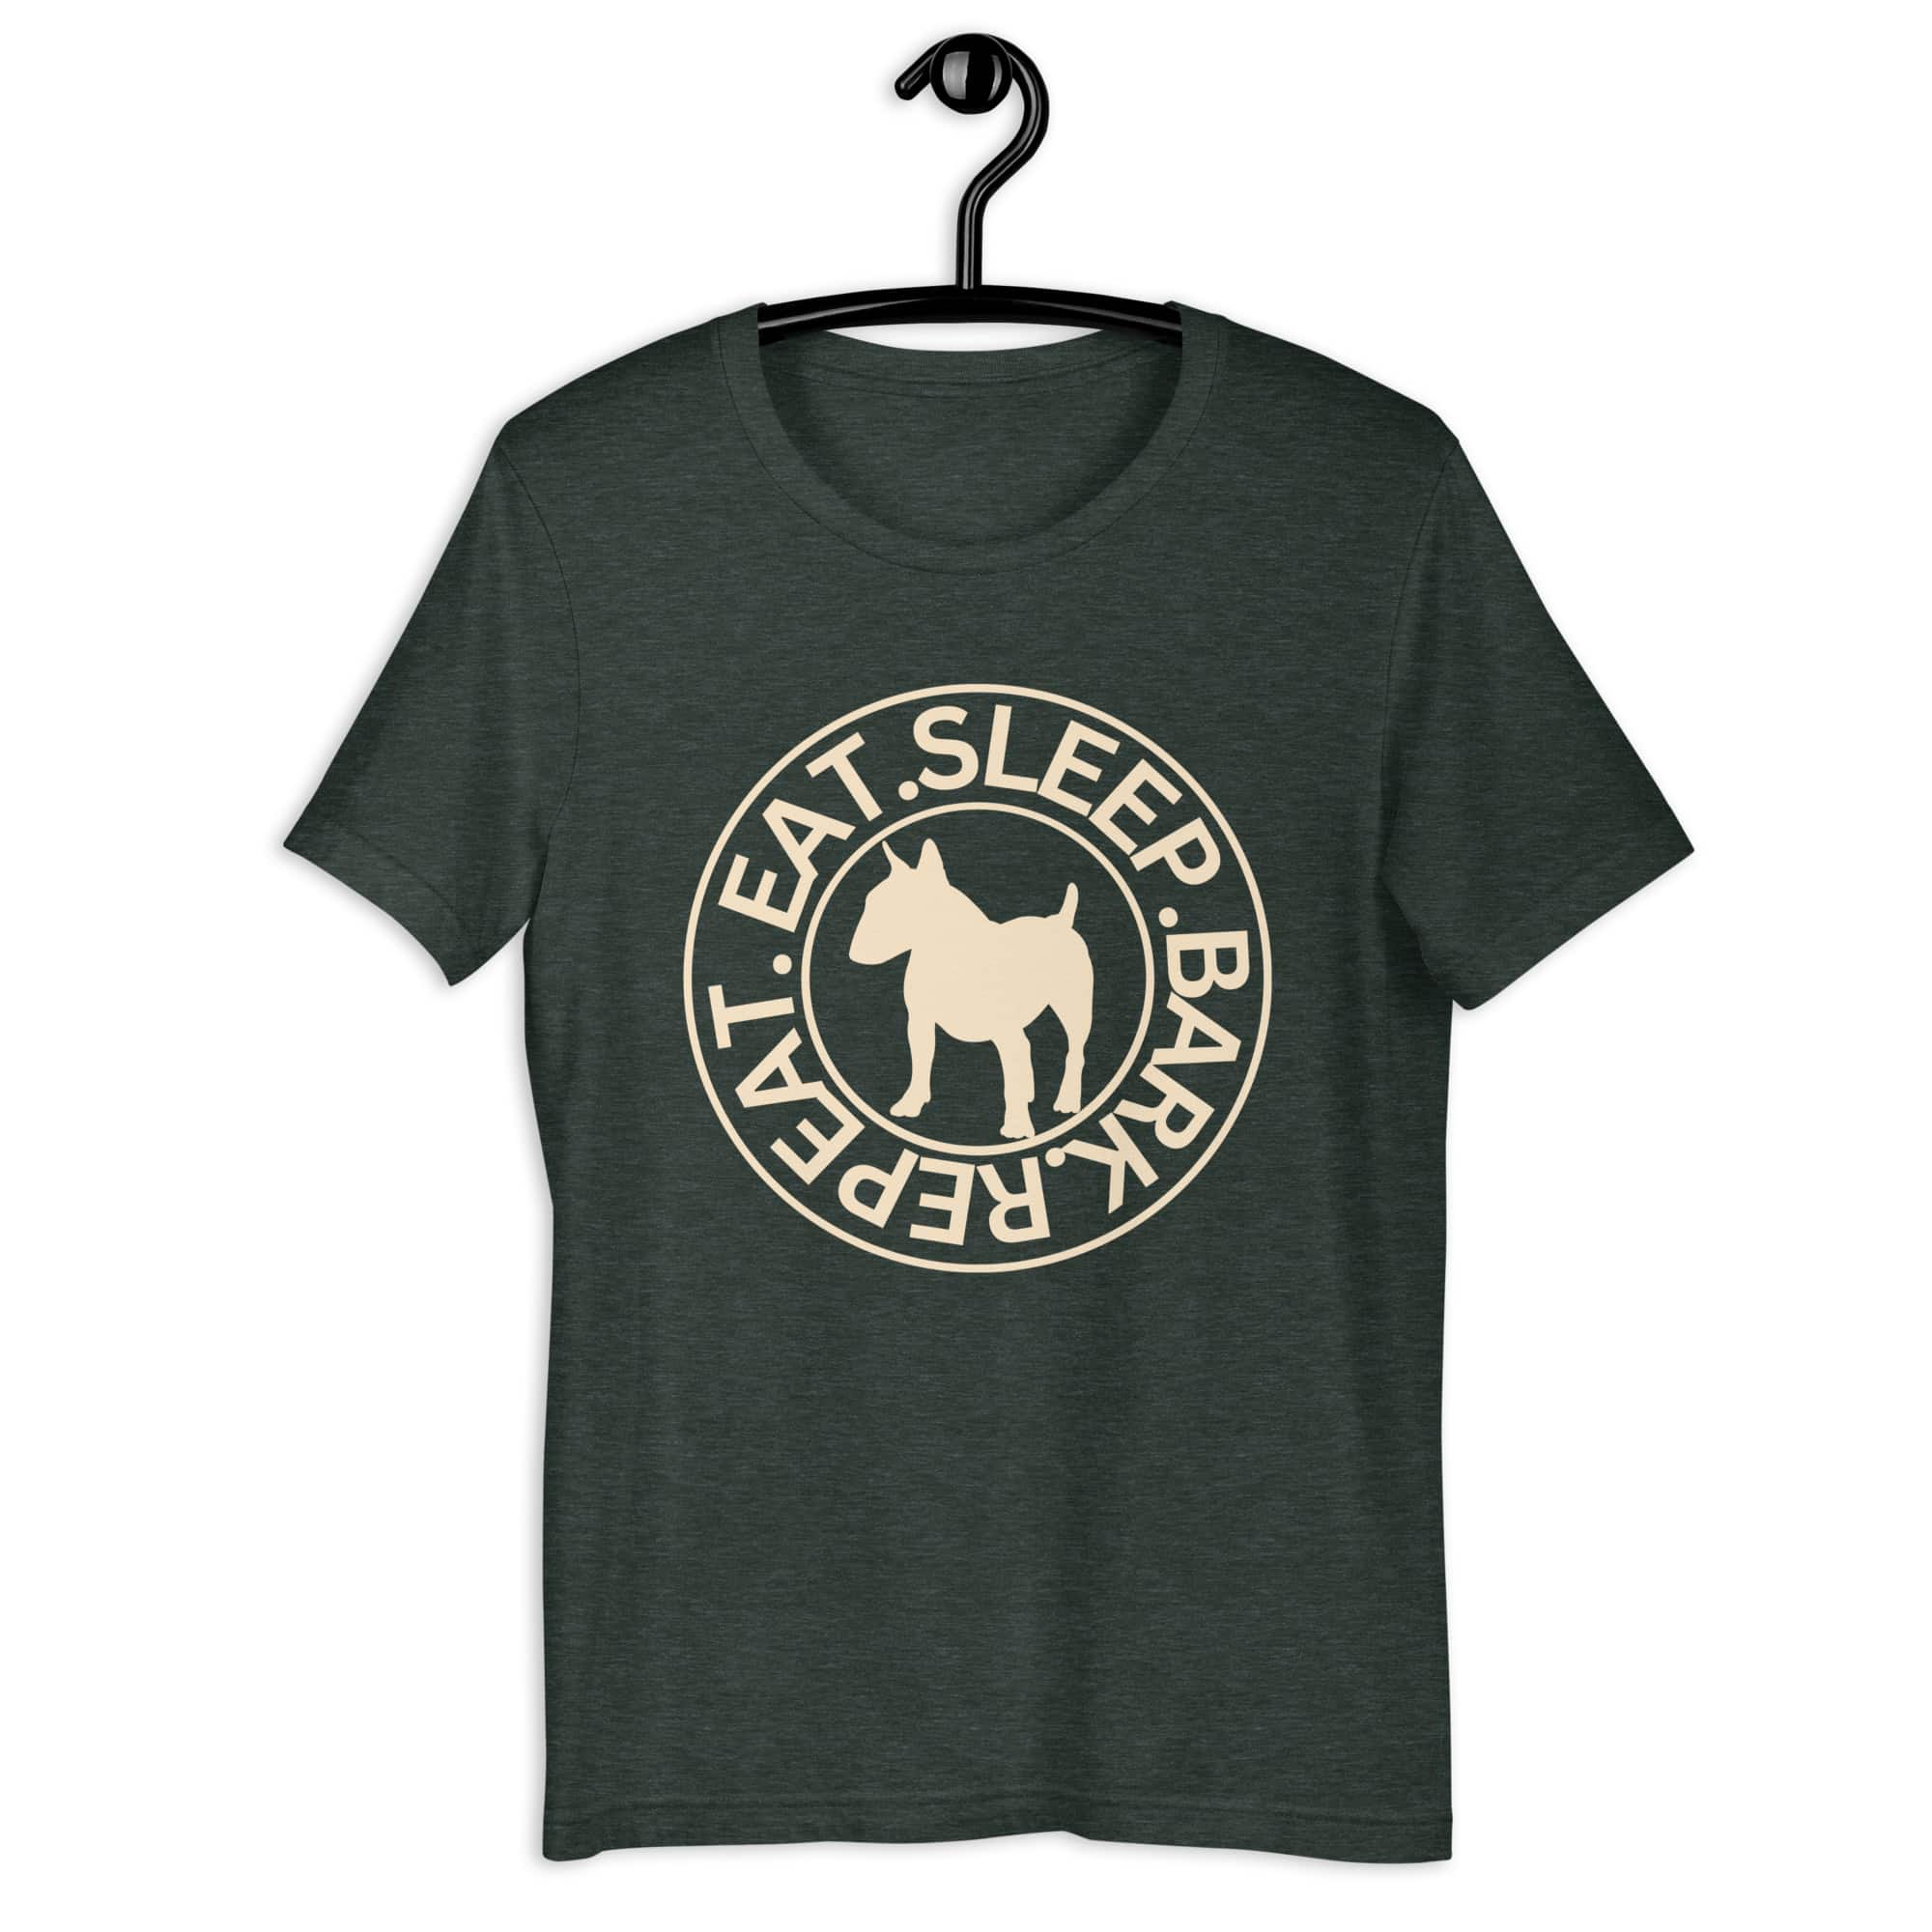 Eat Sleep Bark Repeat Bull Terrier Unisex T-Shirt. Heather Forest